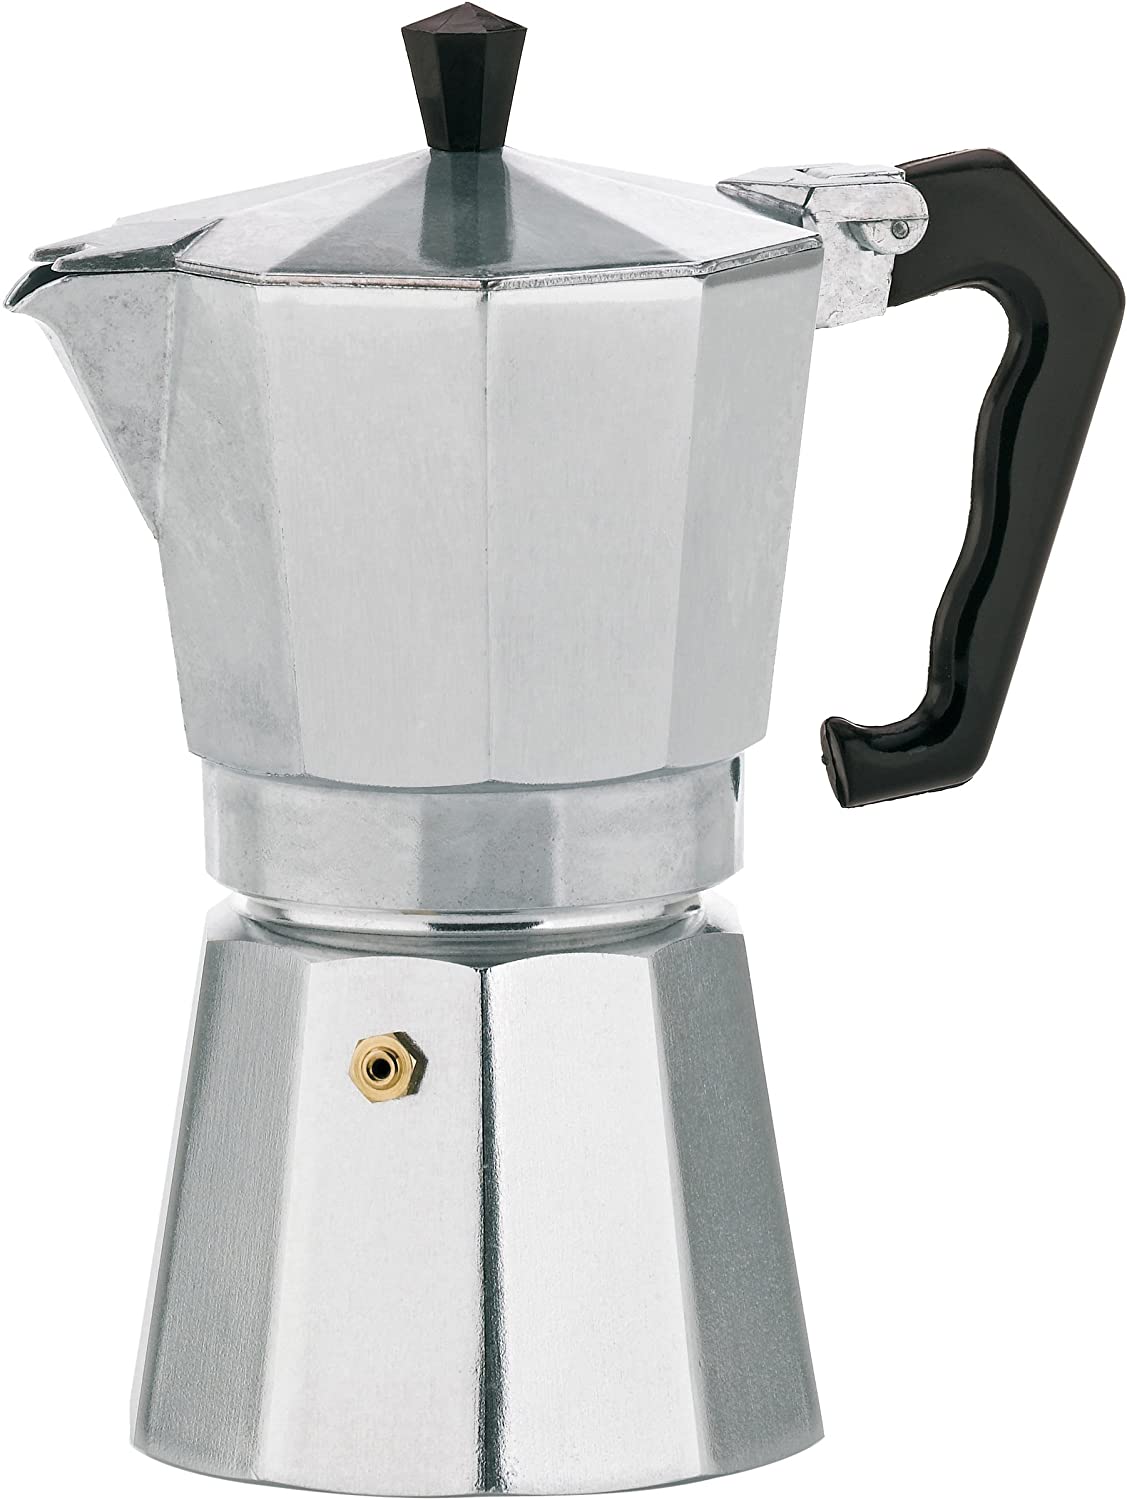 Kela Italia 10591 Espresso Pot for 6 Cups